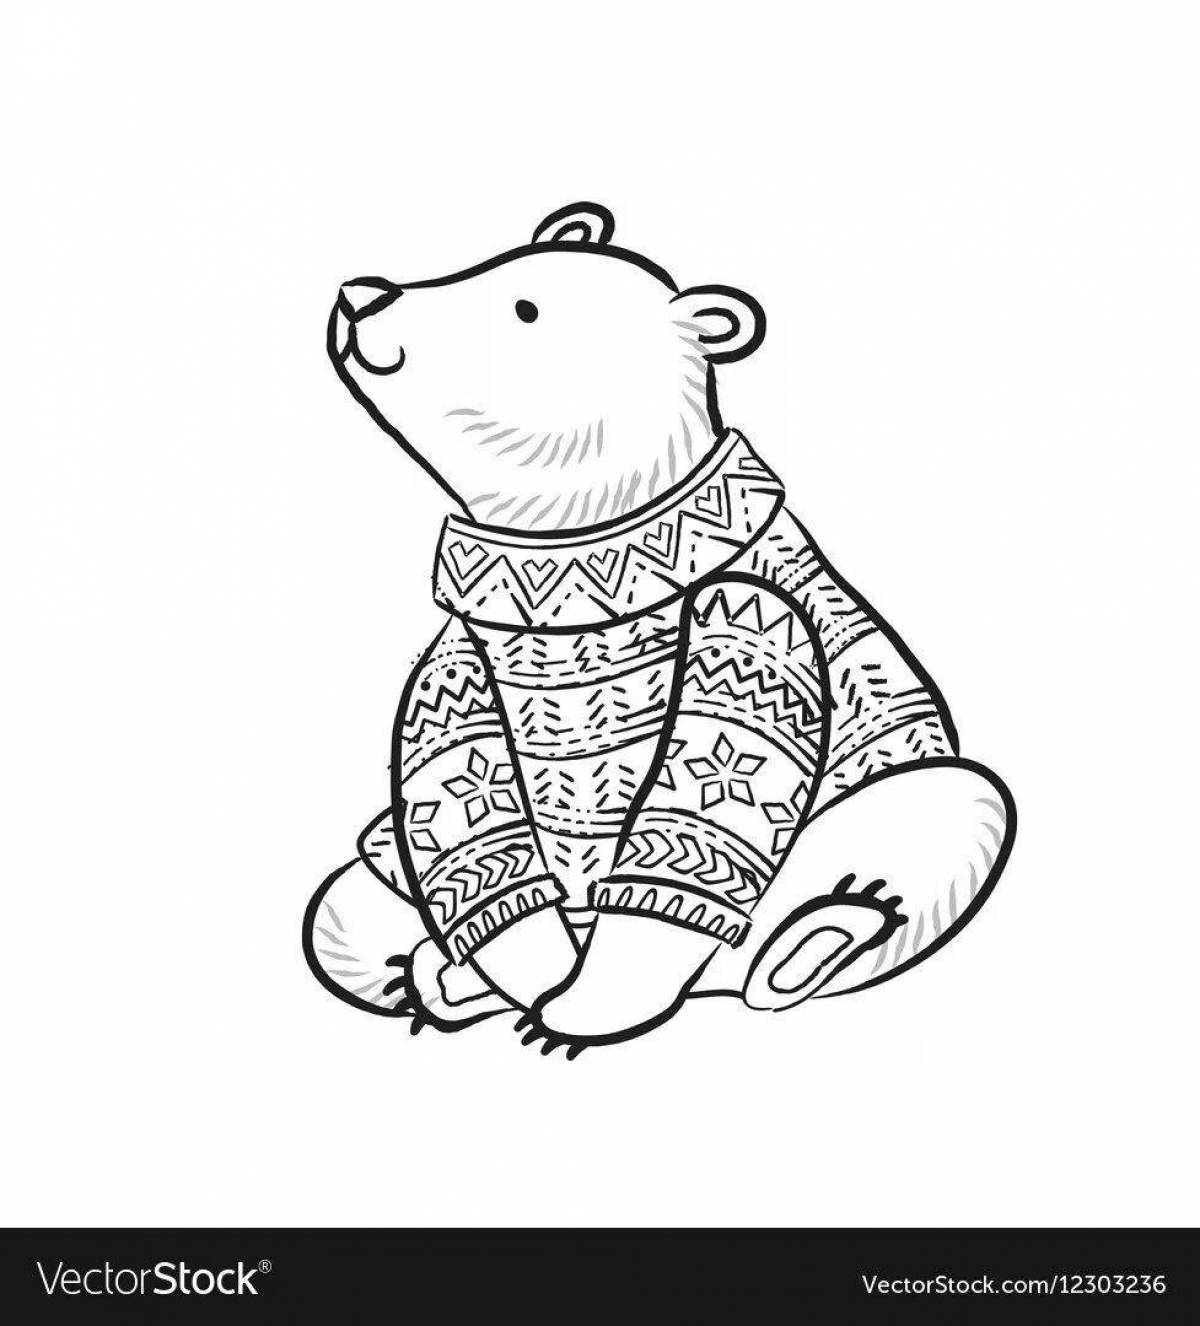 Символ россии медведь #12